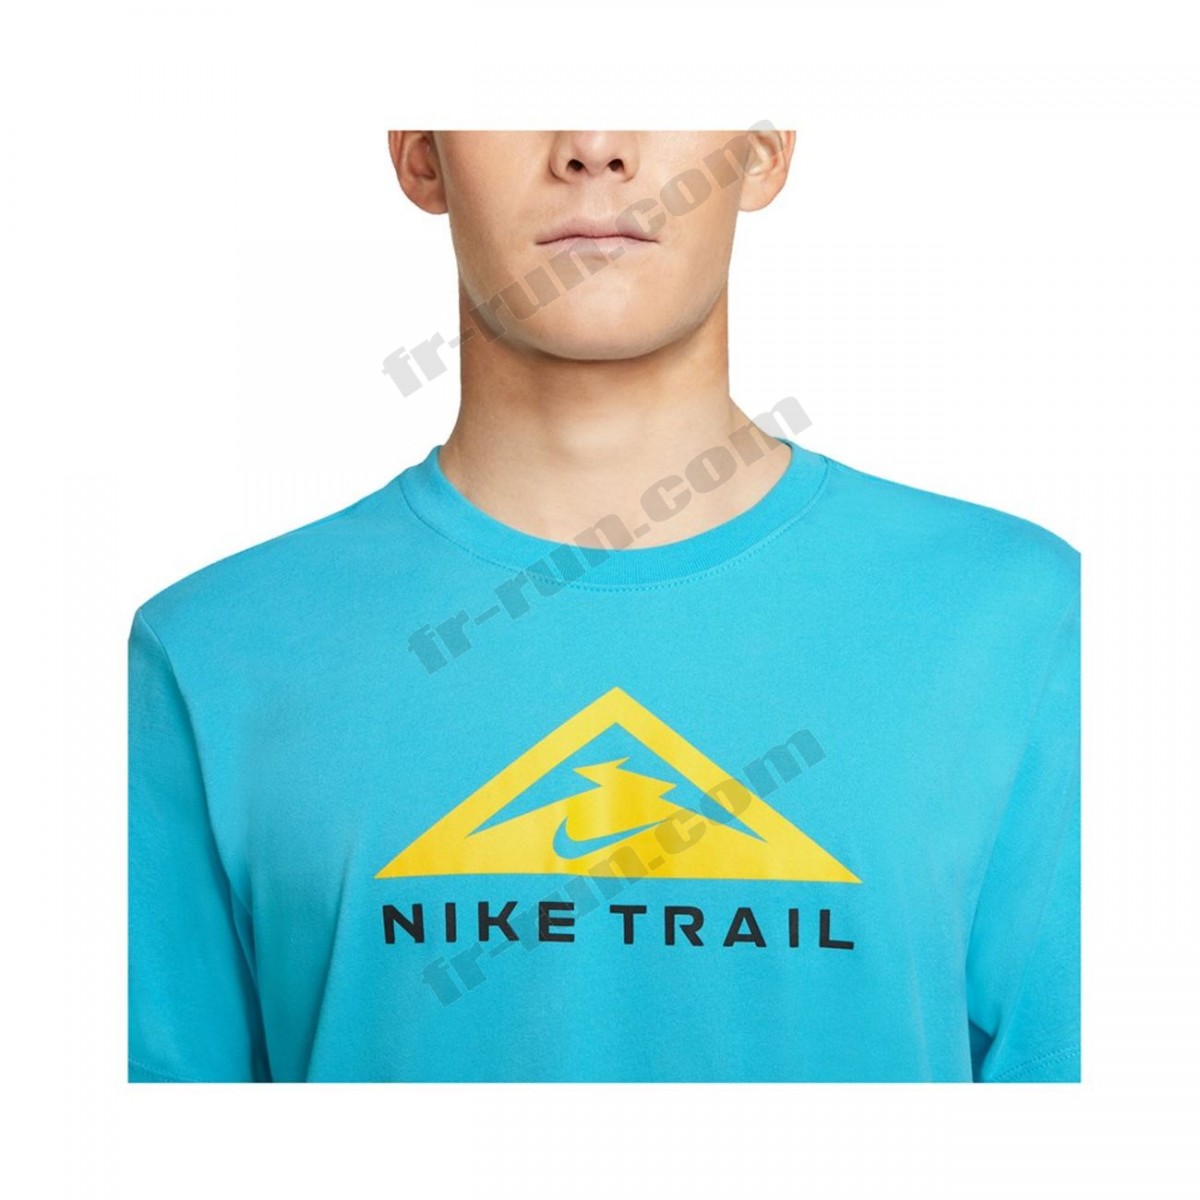 Nike/running homme NIKE Nike Trail Running ◇◇◇ Pas Cher Du Tout - -6